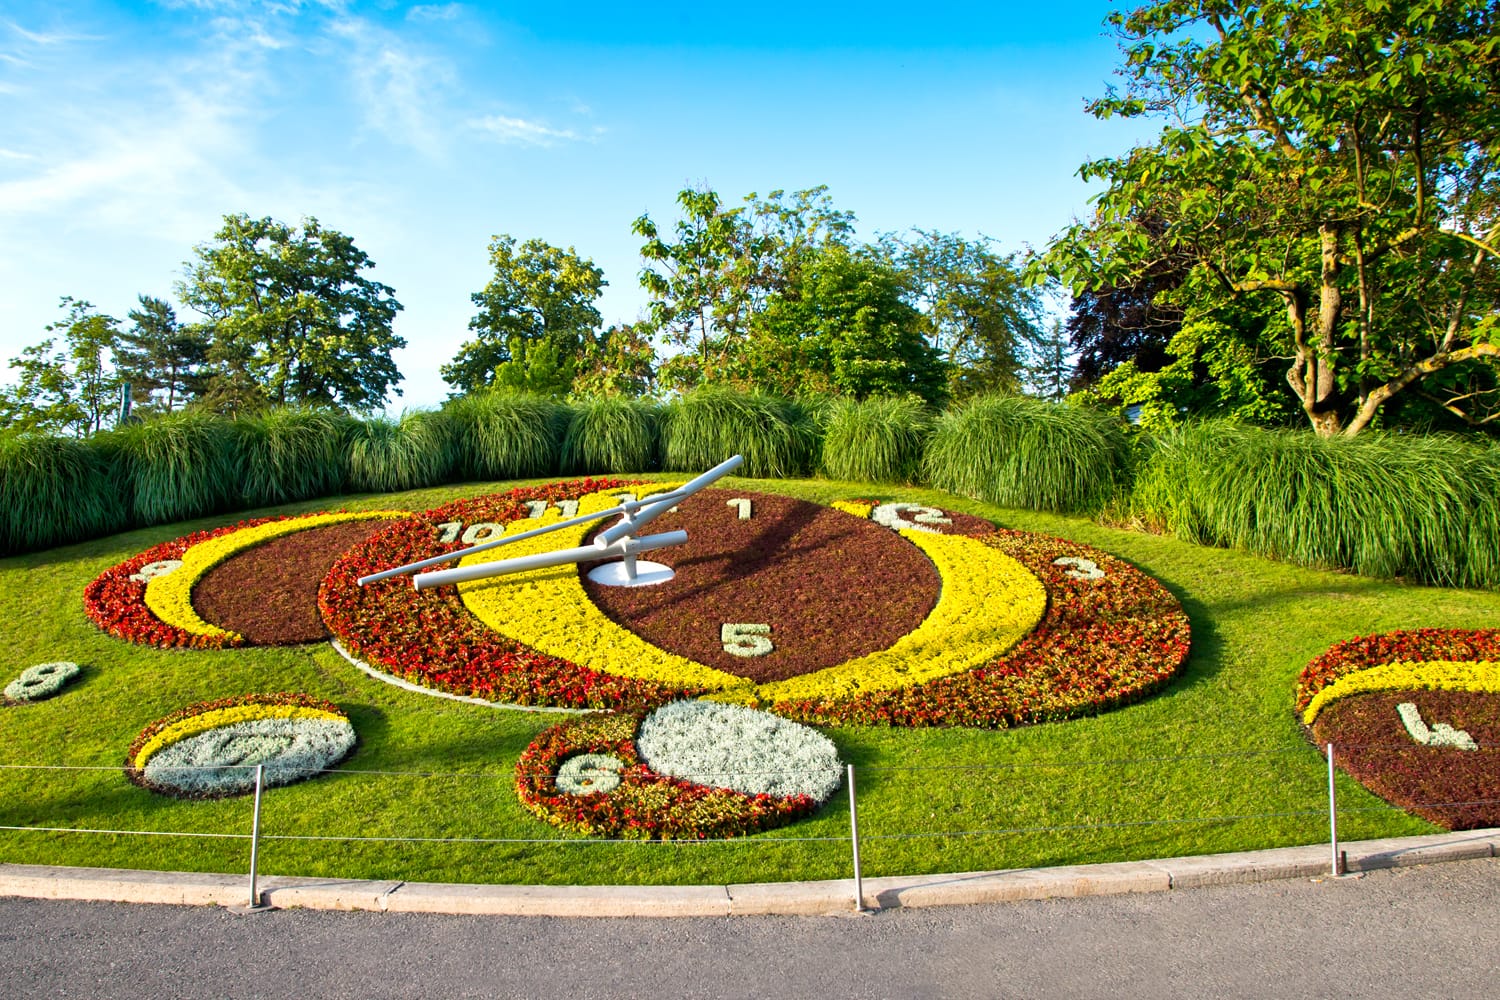 Famous flower clock in Geneva, Switzerland